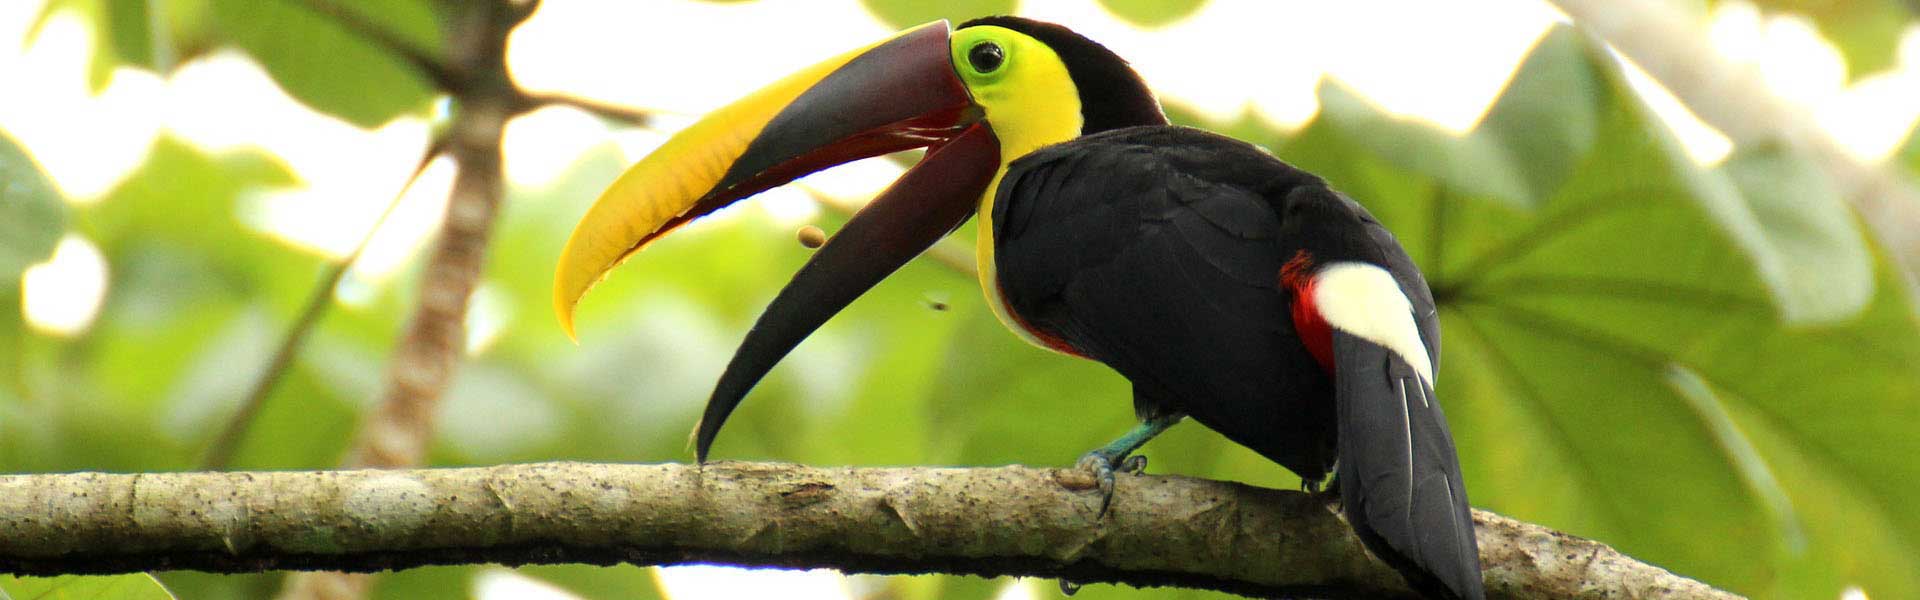 Voyage Costa Rica : Toucan à carène de la jungle du Costa Rica